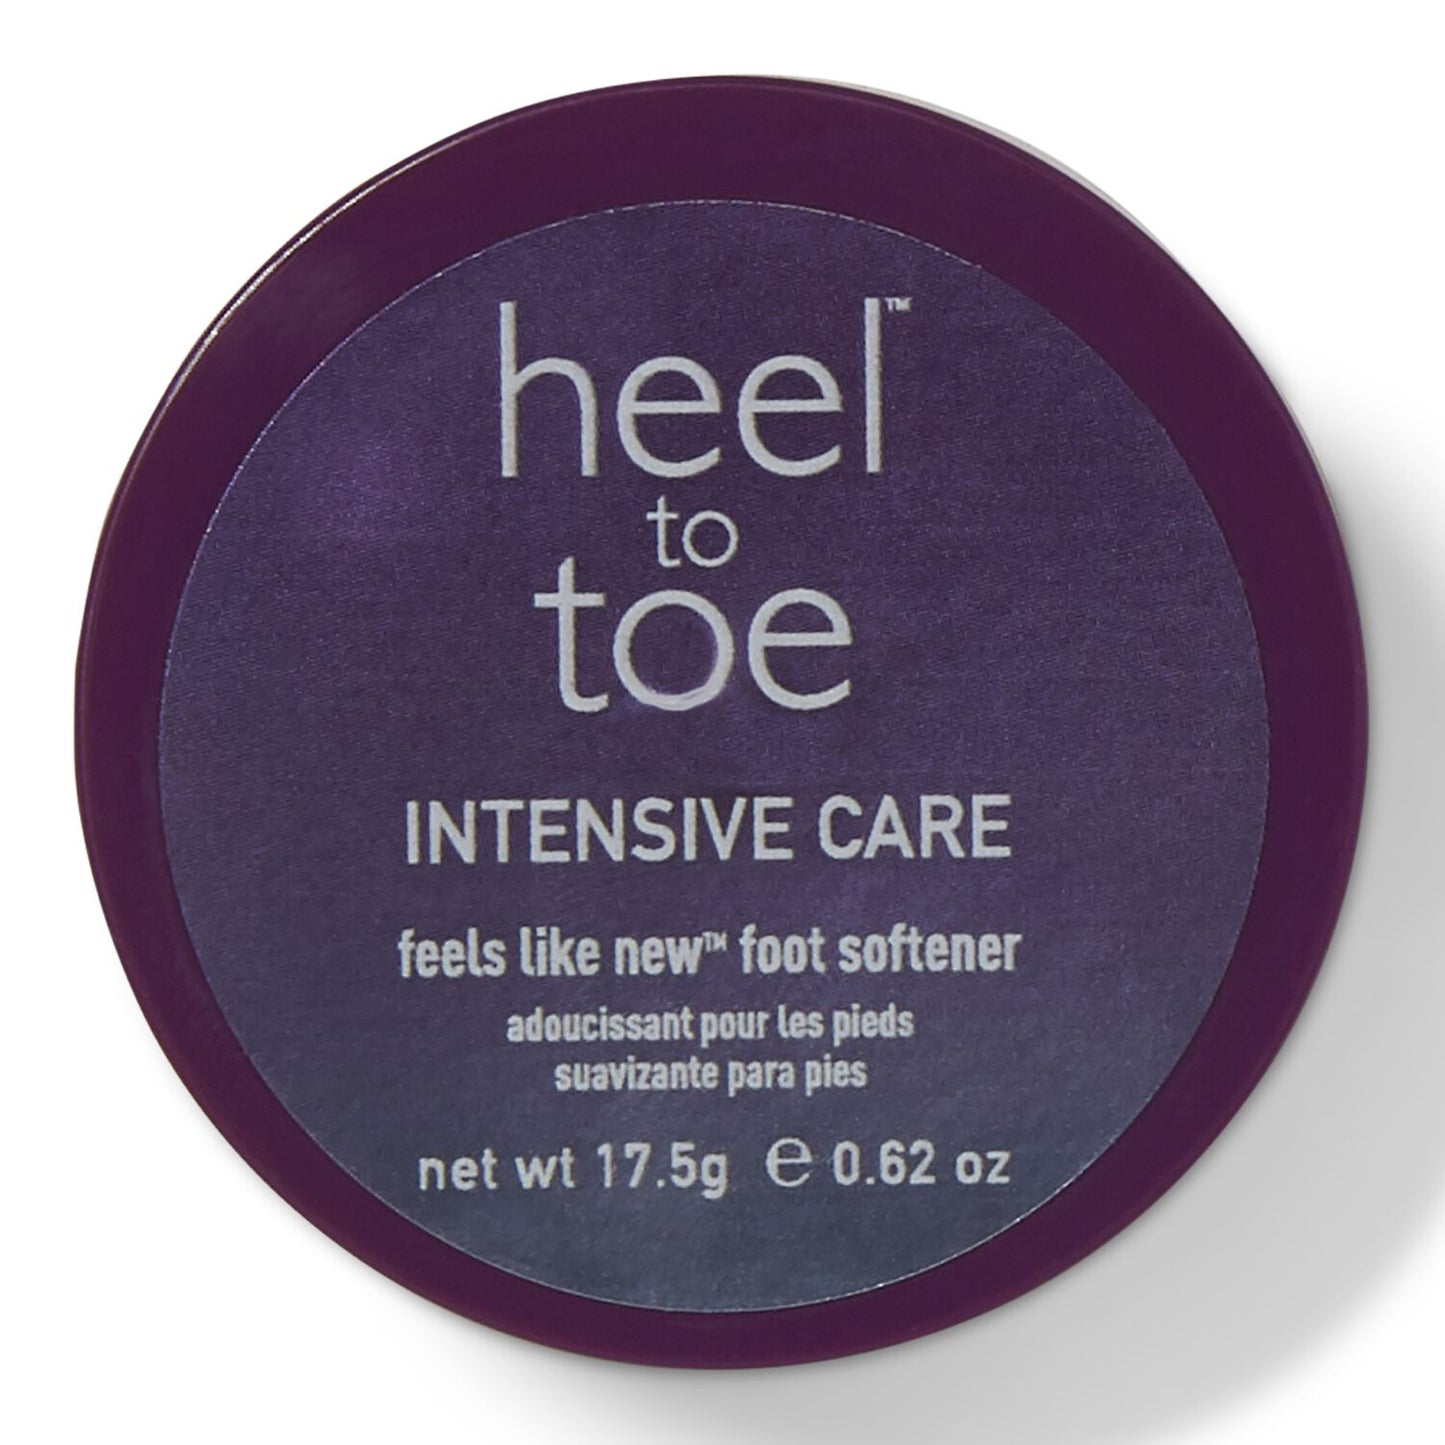 Heel to Toe Feels Like New Foot Softener Pot .62oz.